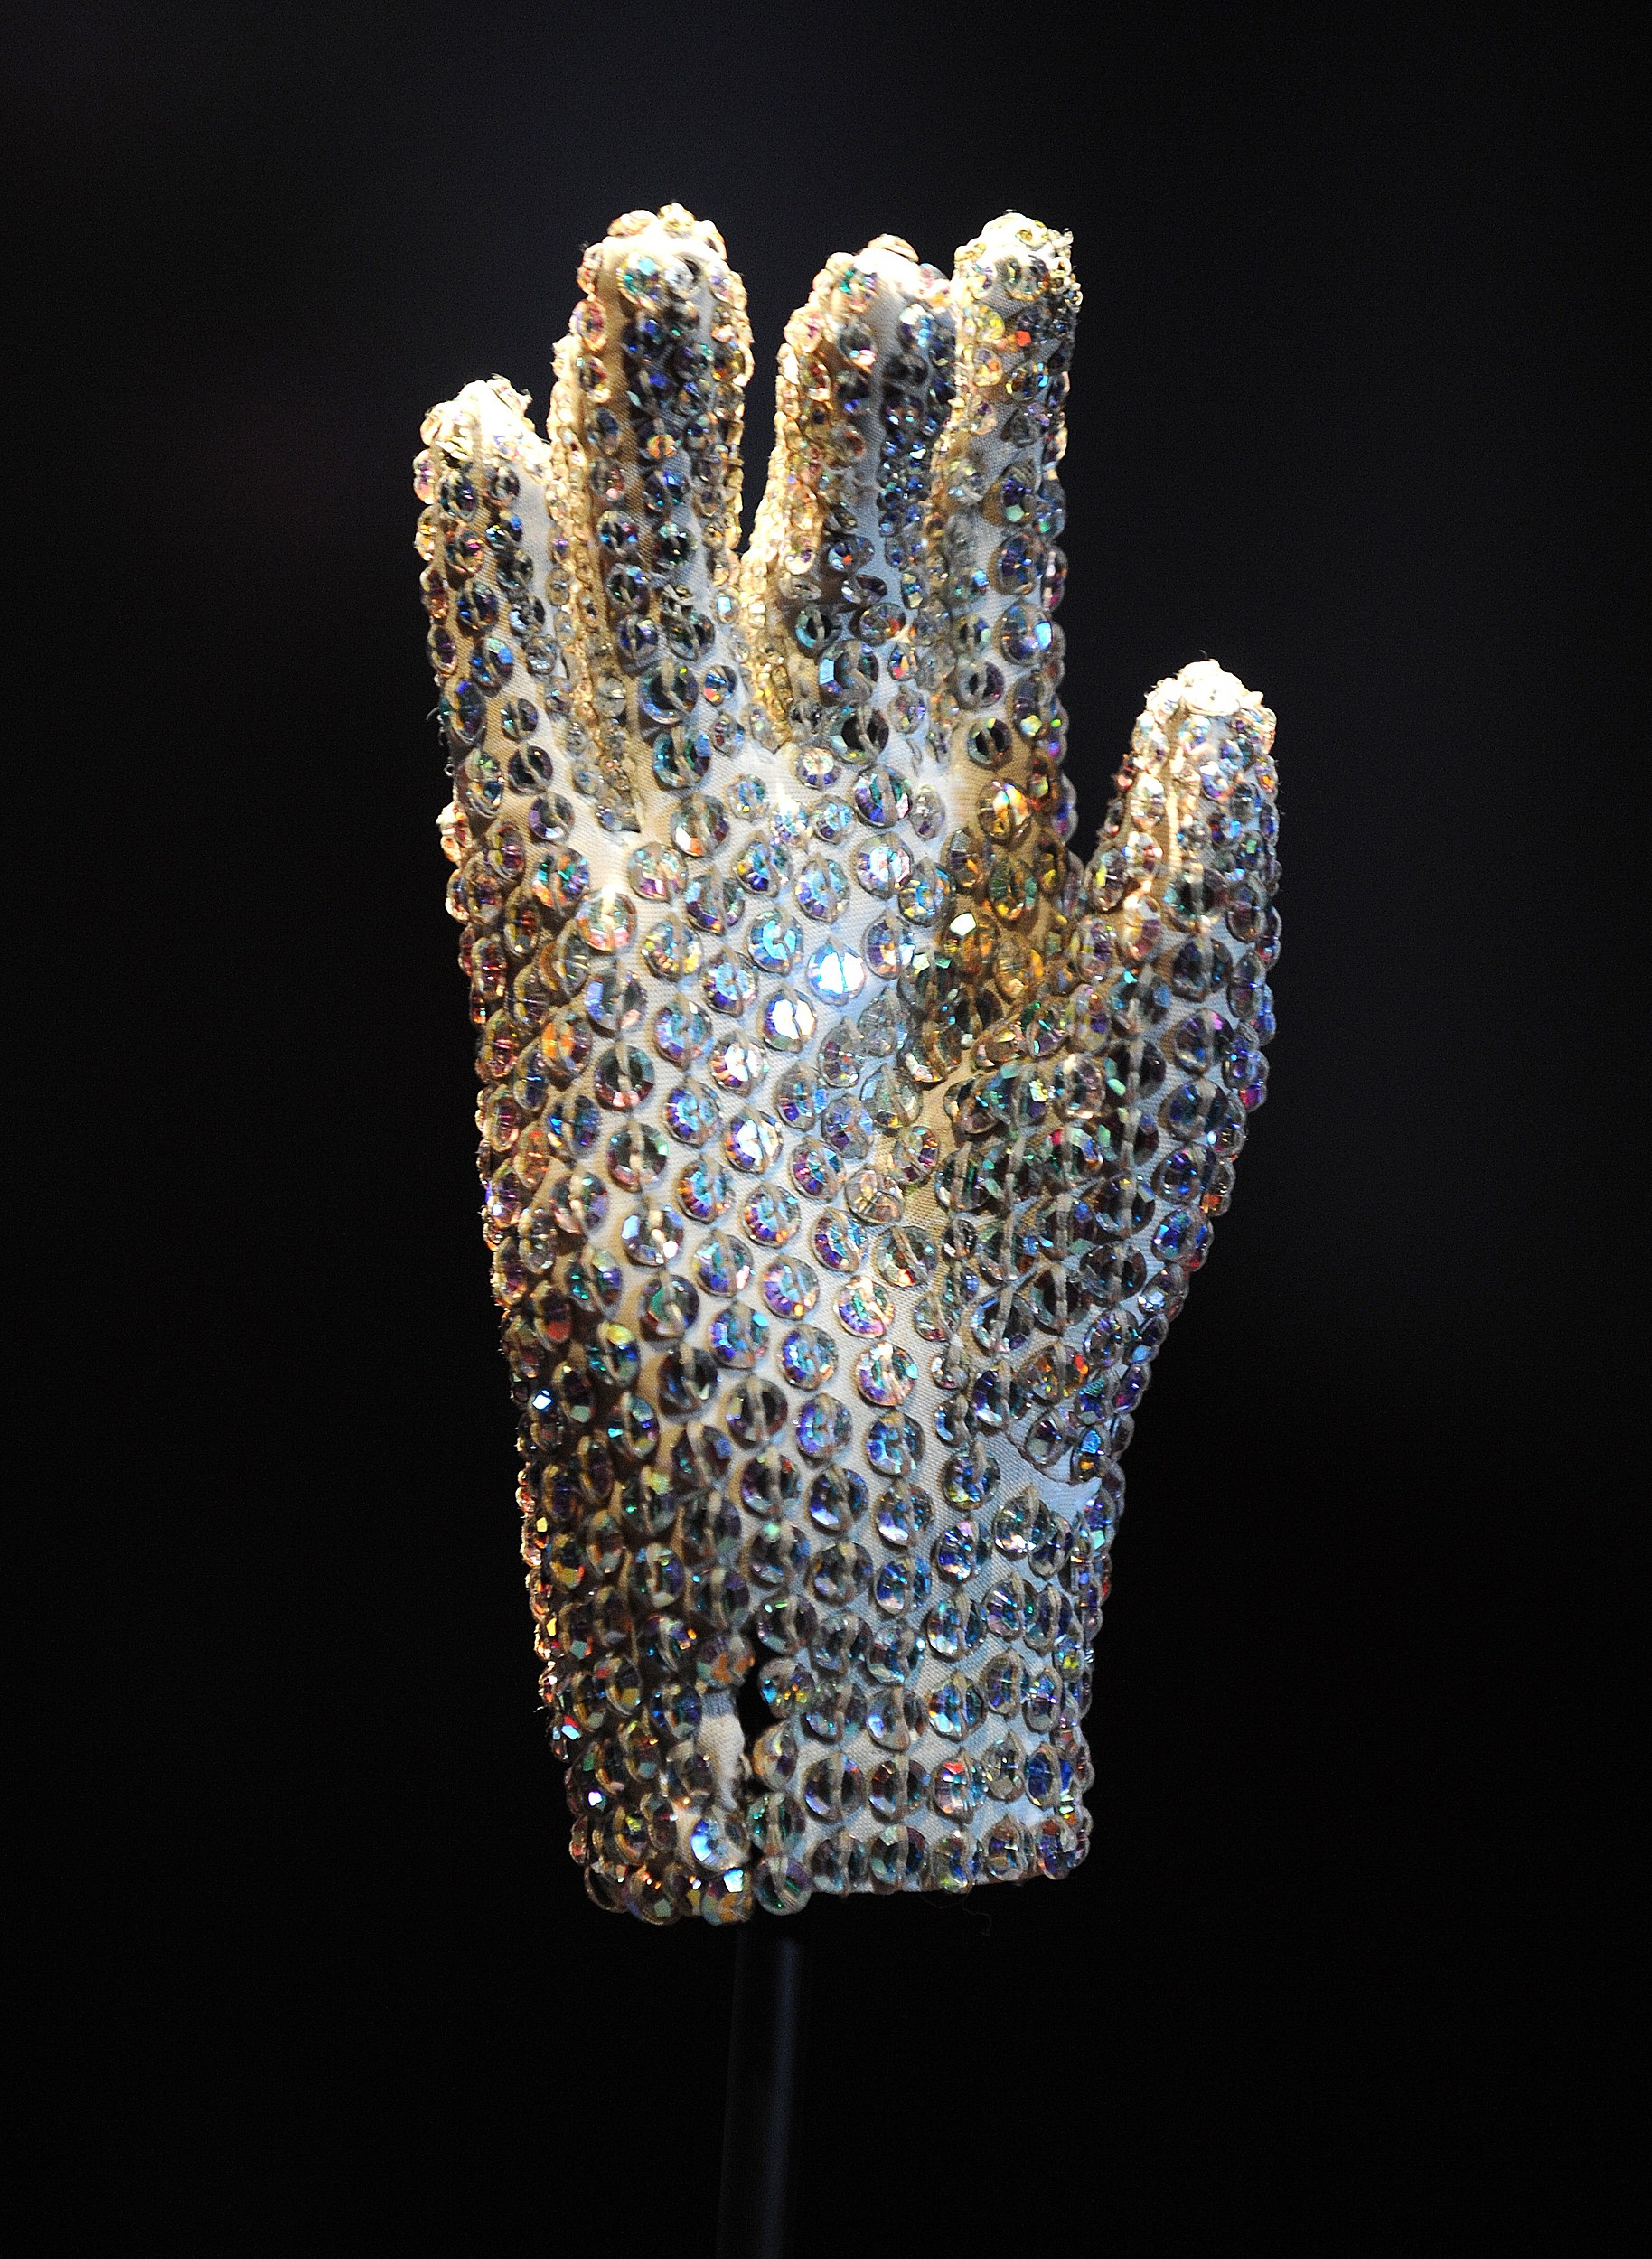 Michael Jackson glove sells for $160,000 at auction - Las Vegas